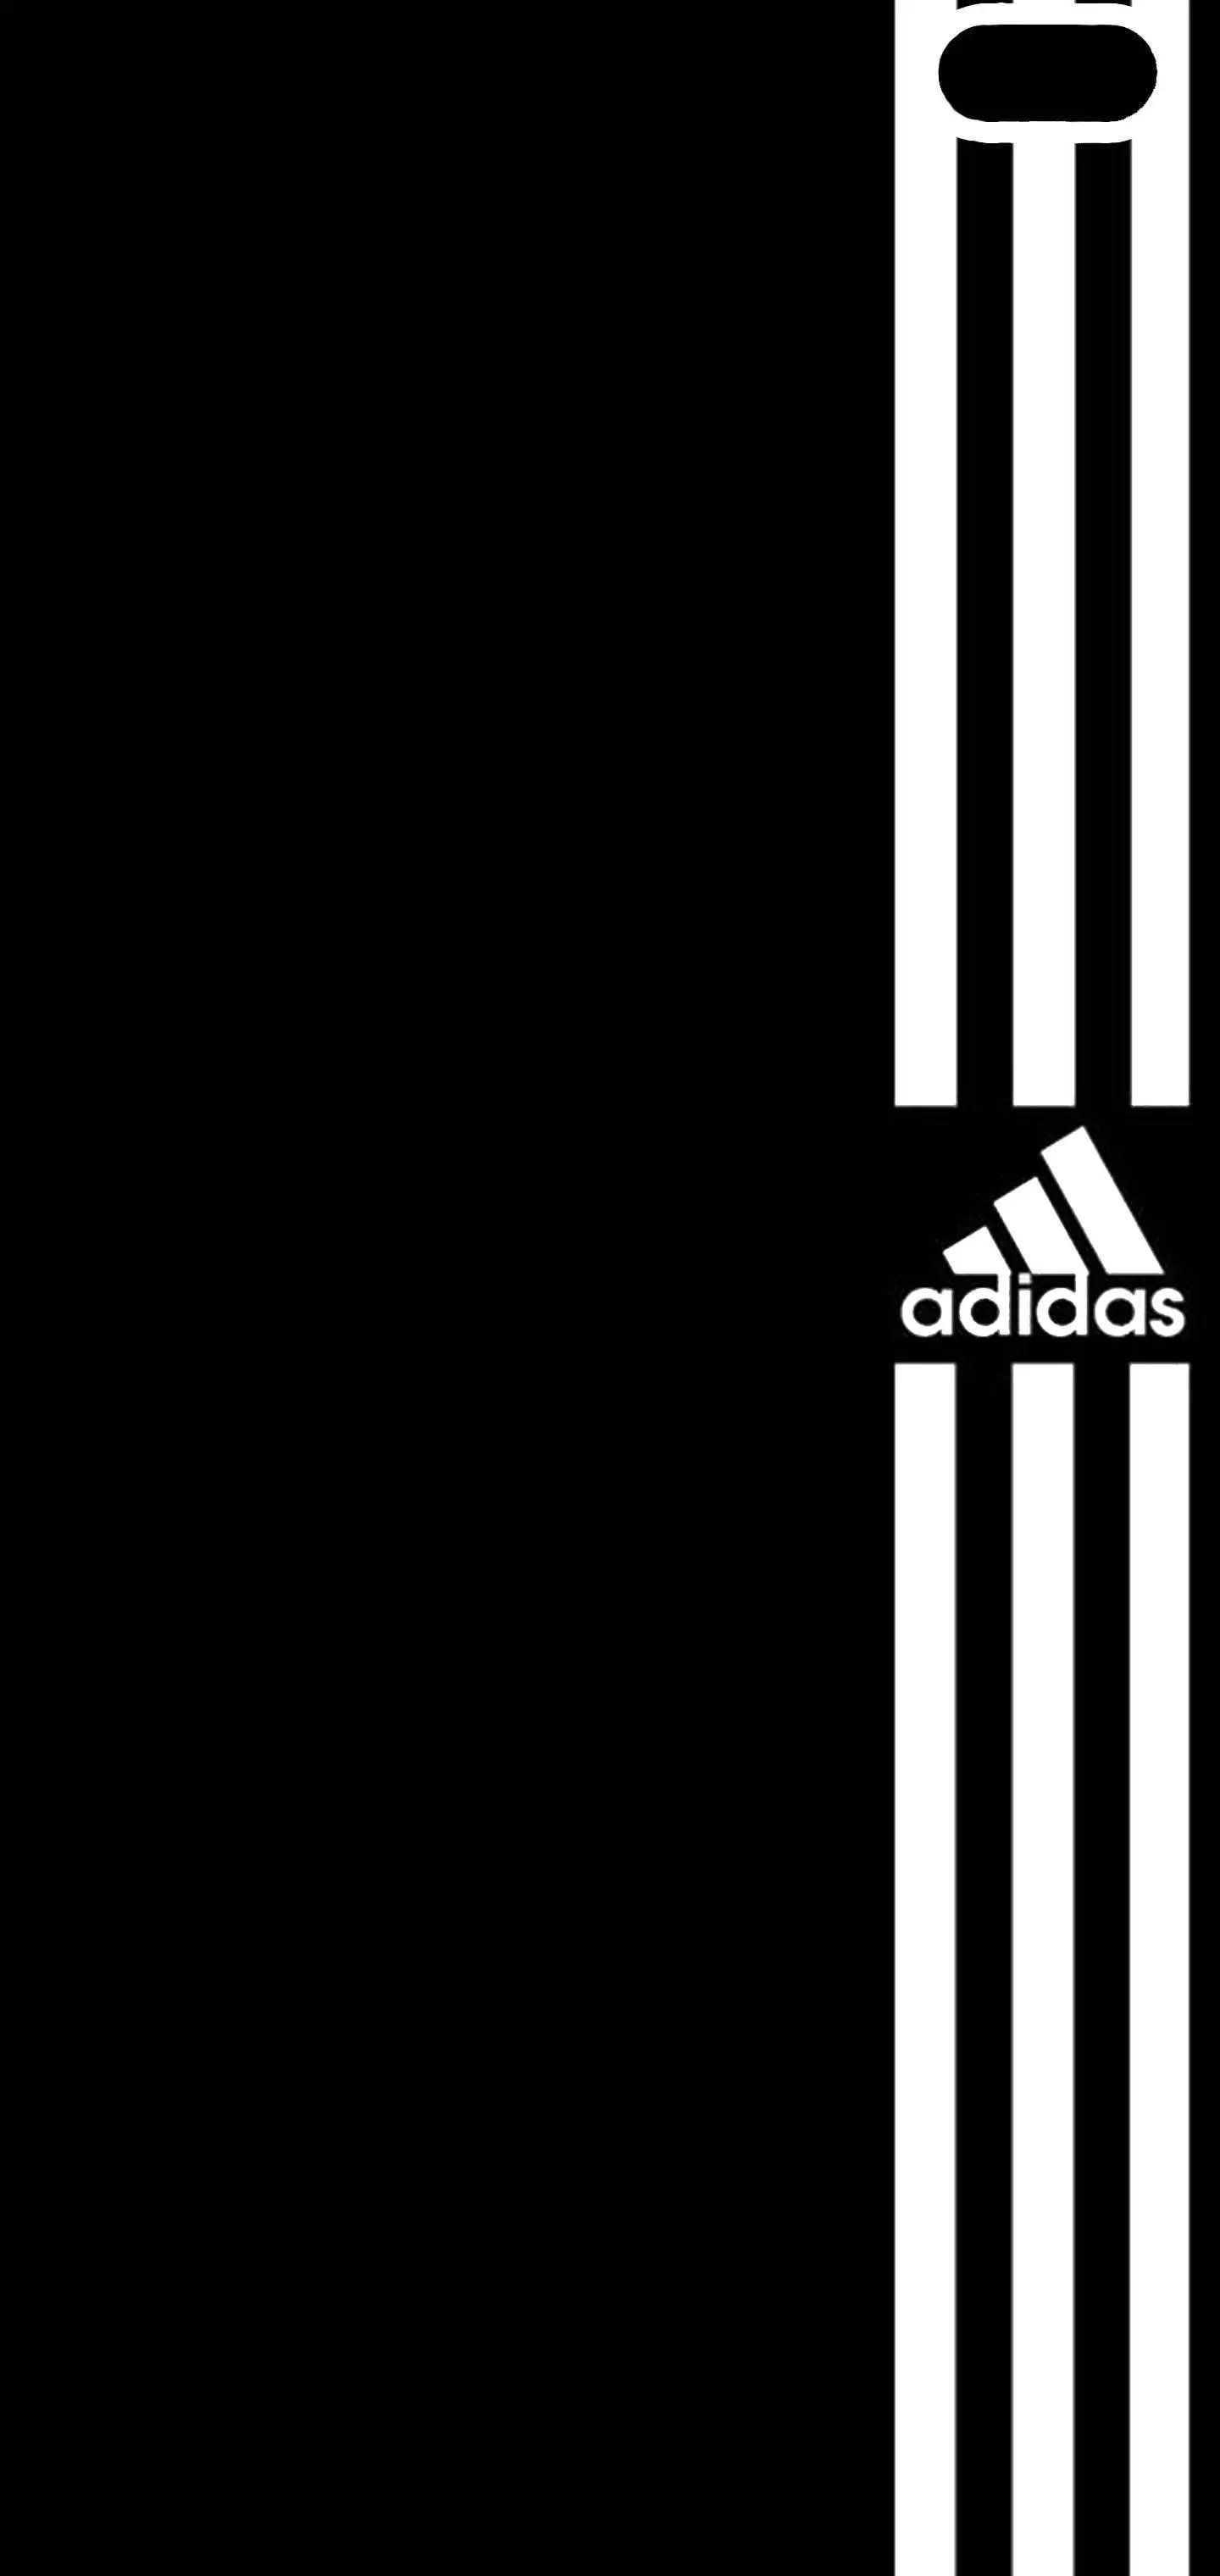 Adidas Stripes Galaxy S10 Hole Punch Wallpaper